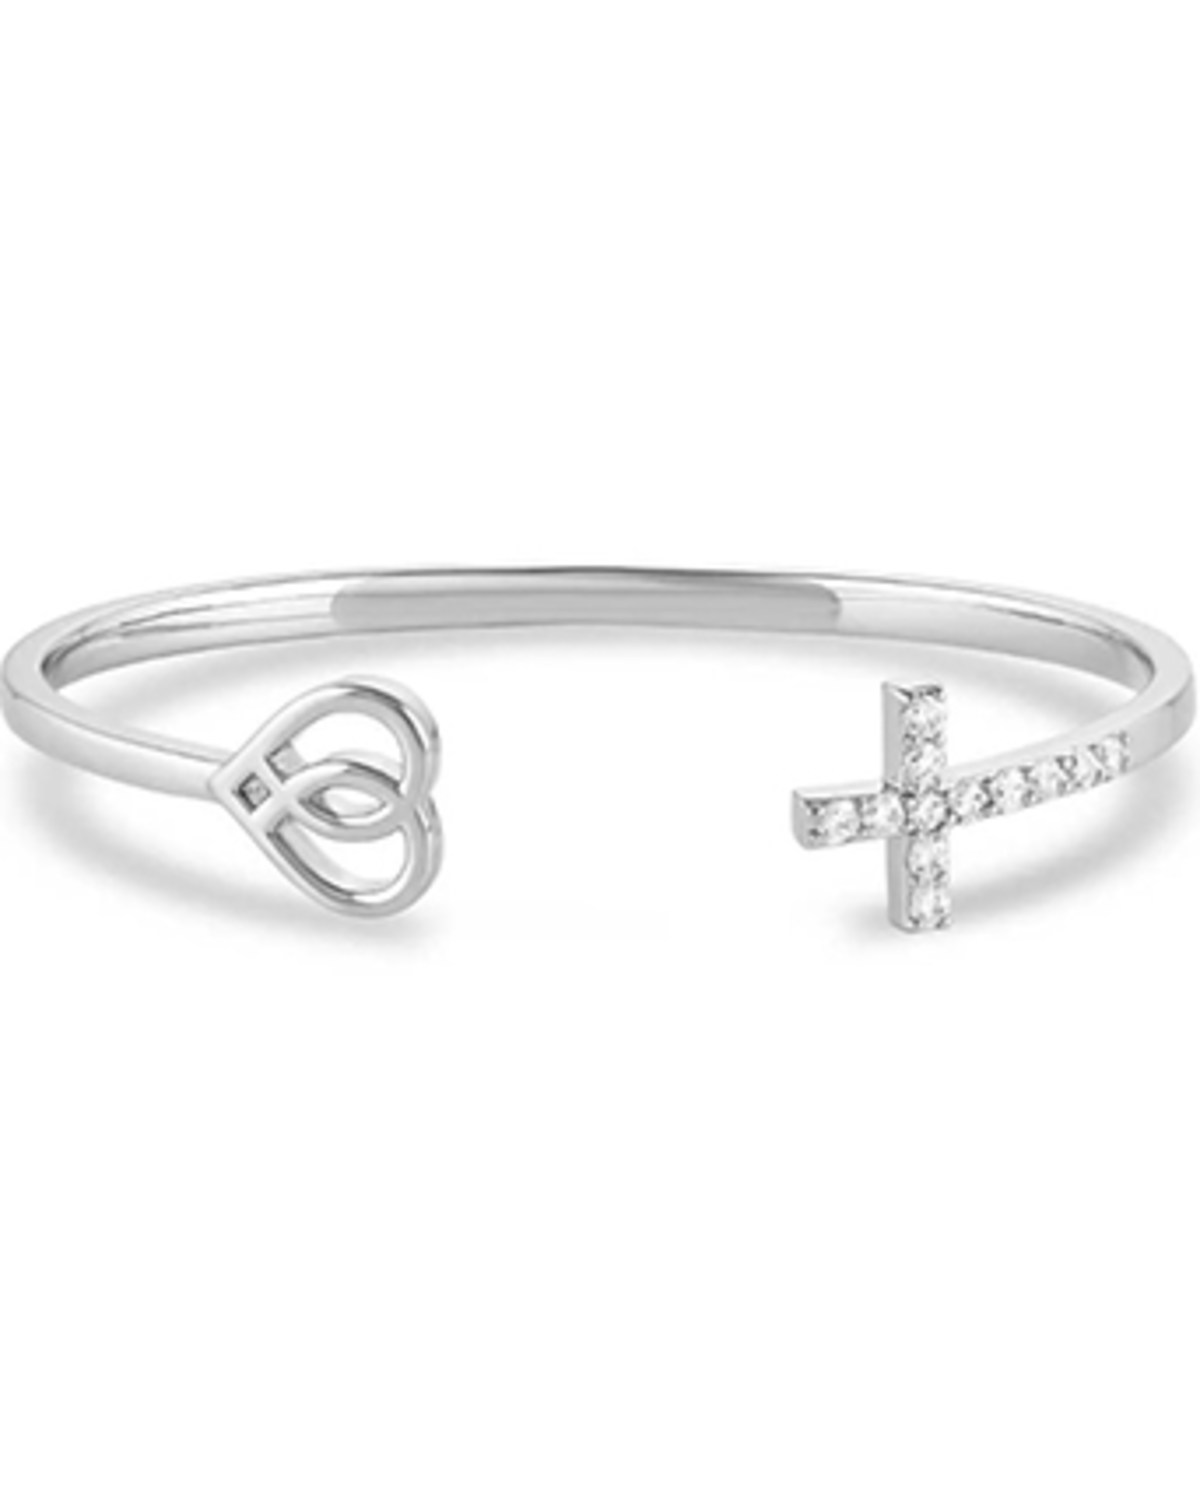 Montana Silversmiths Women's Love and Faith Cuff Bracelet